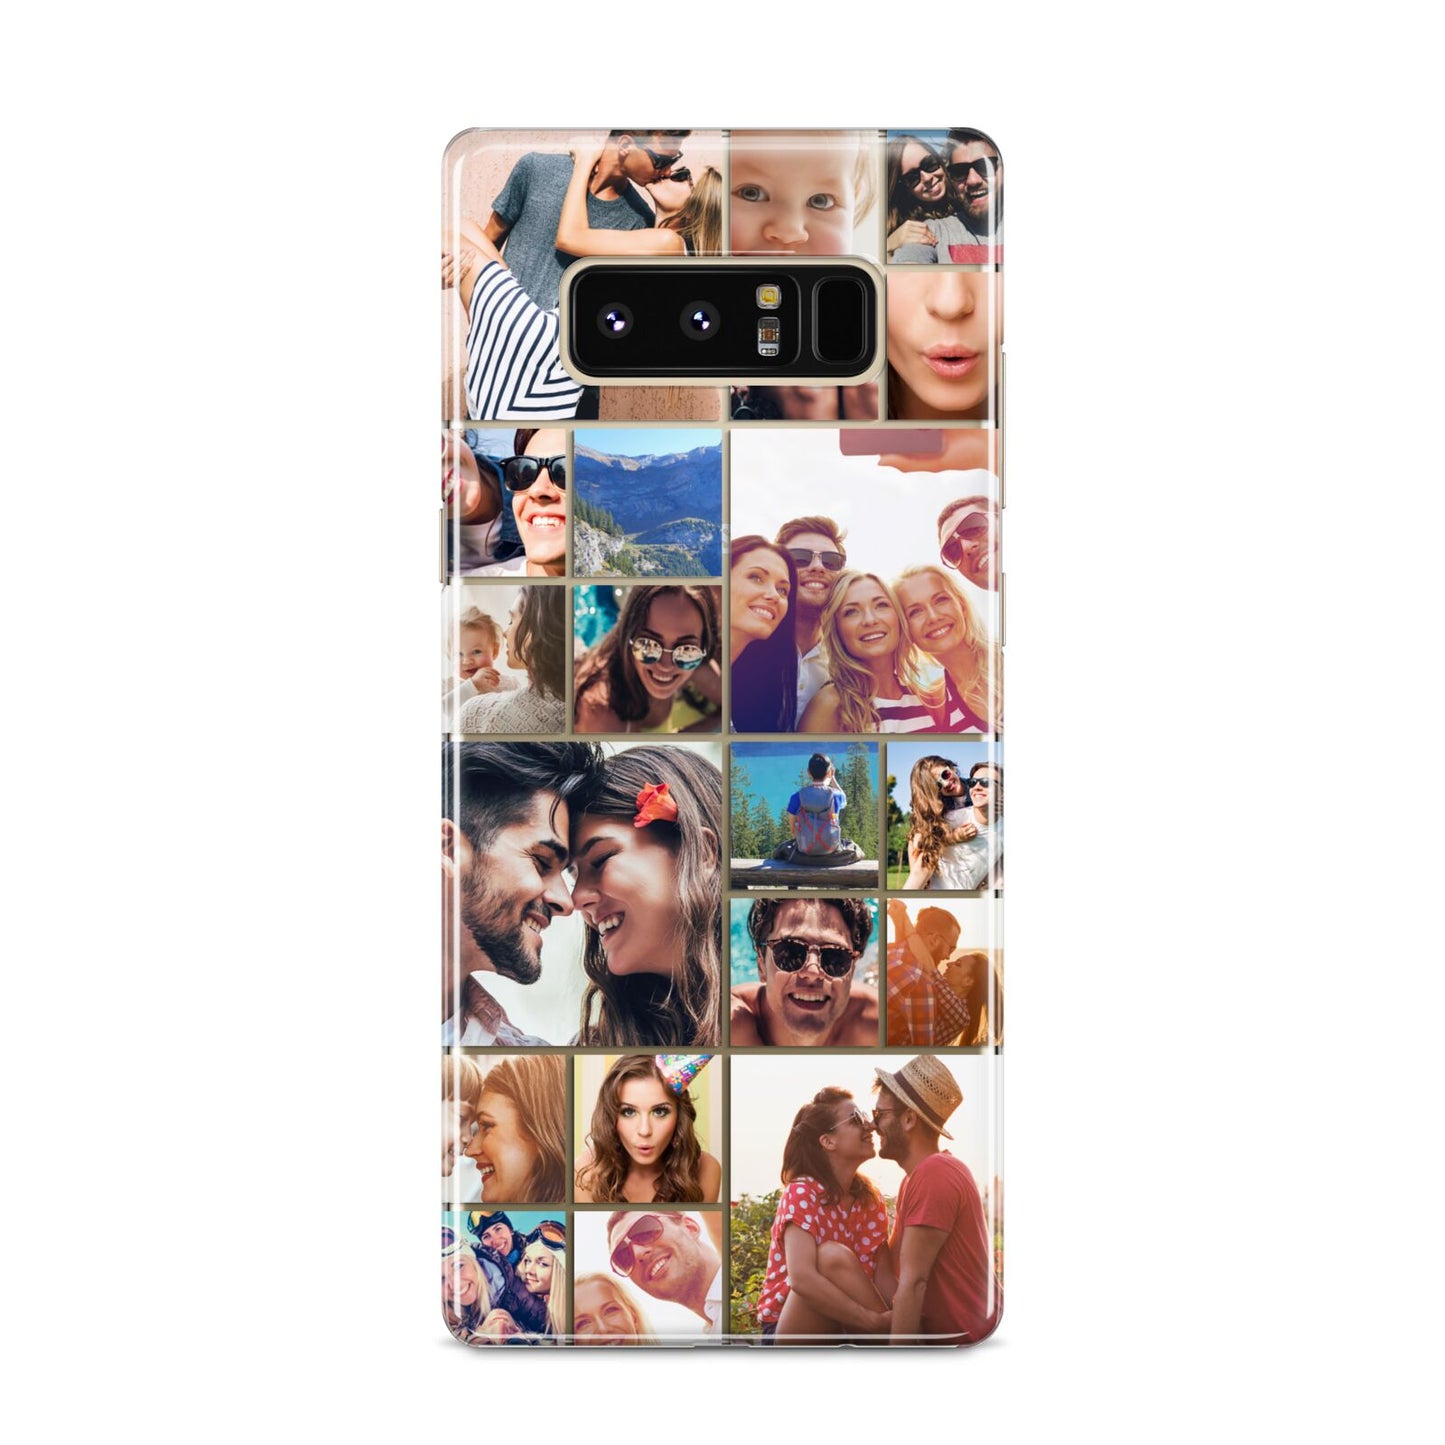 Photo Grid Samsung Galaxy S8 Case